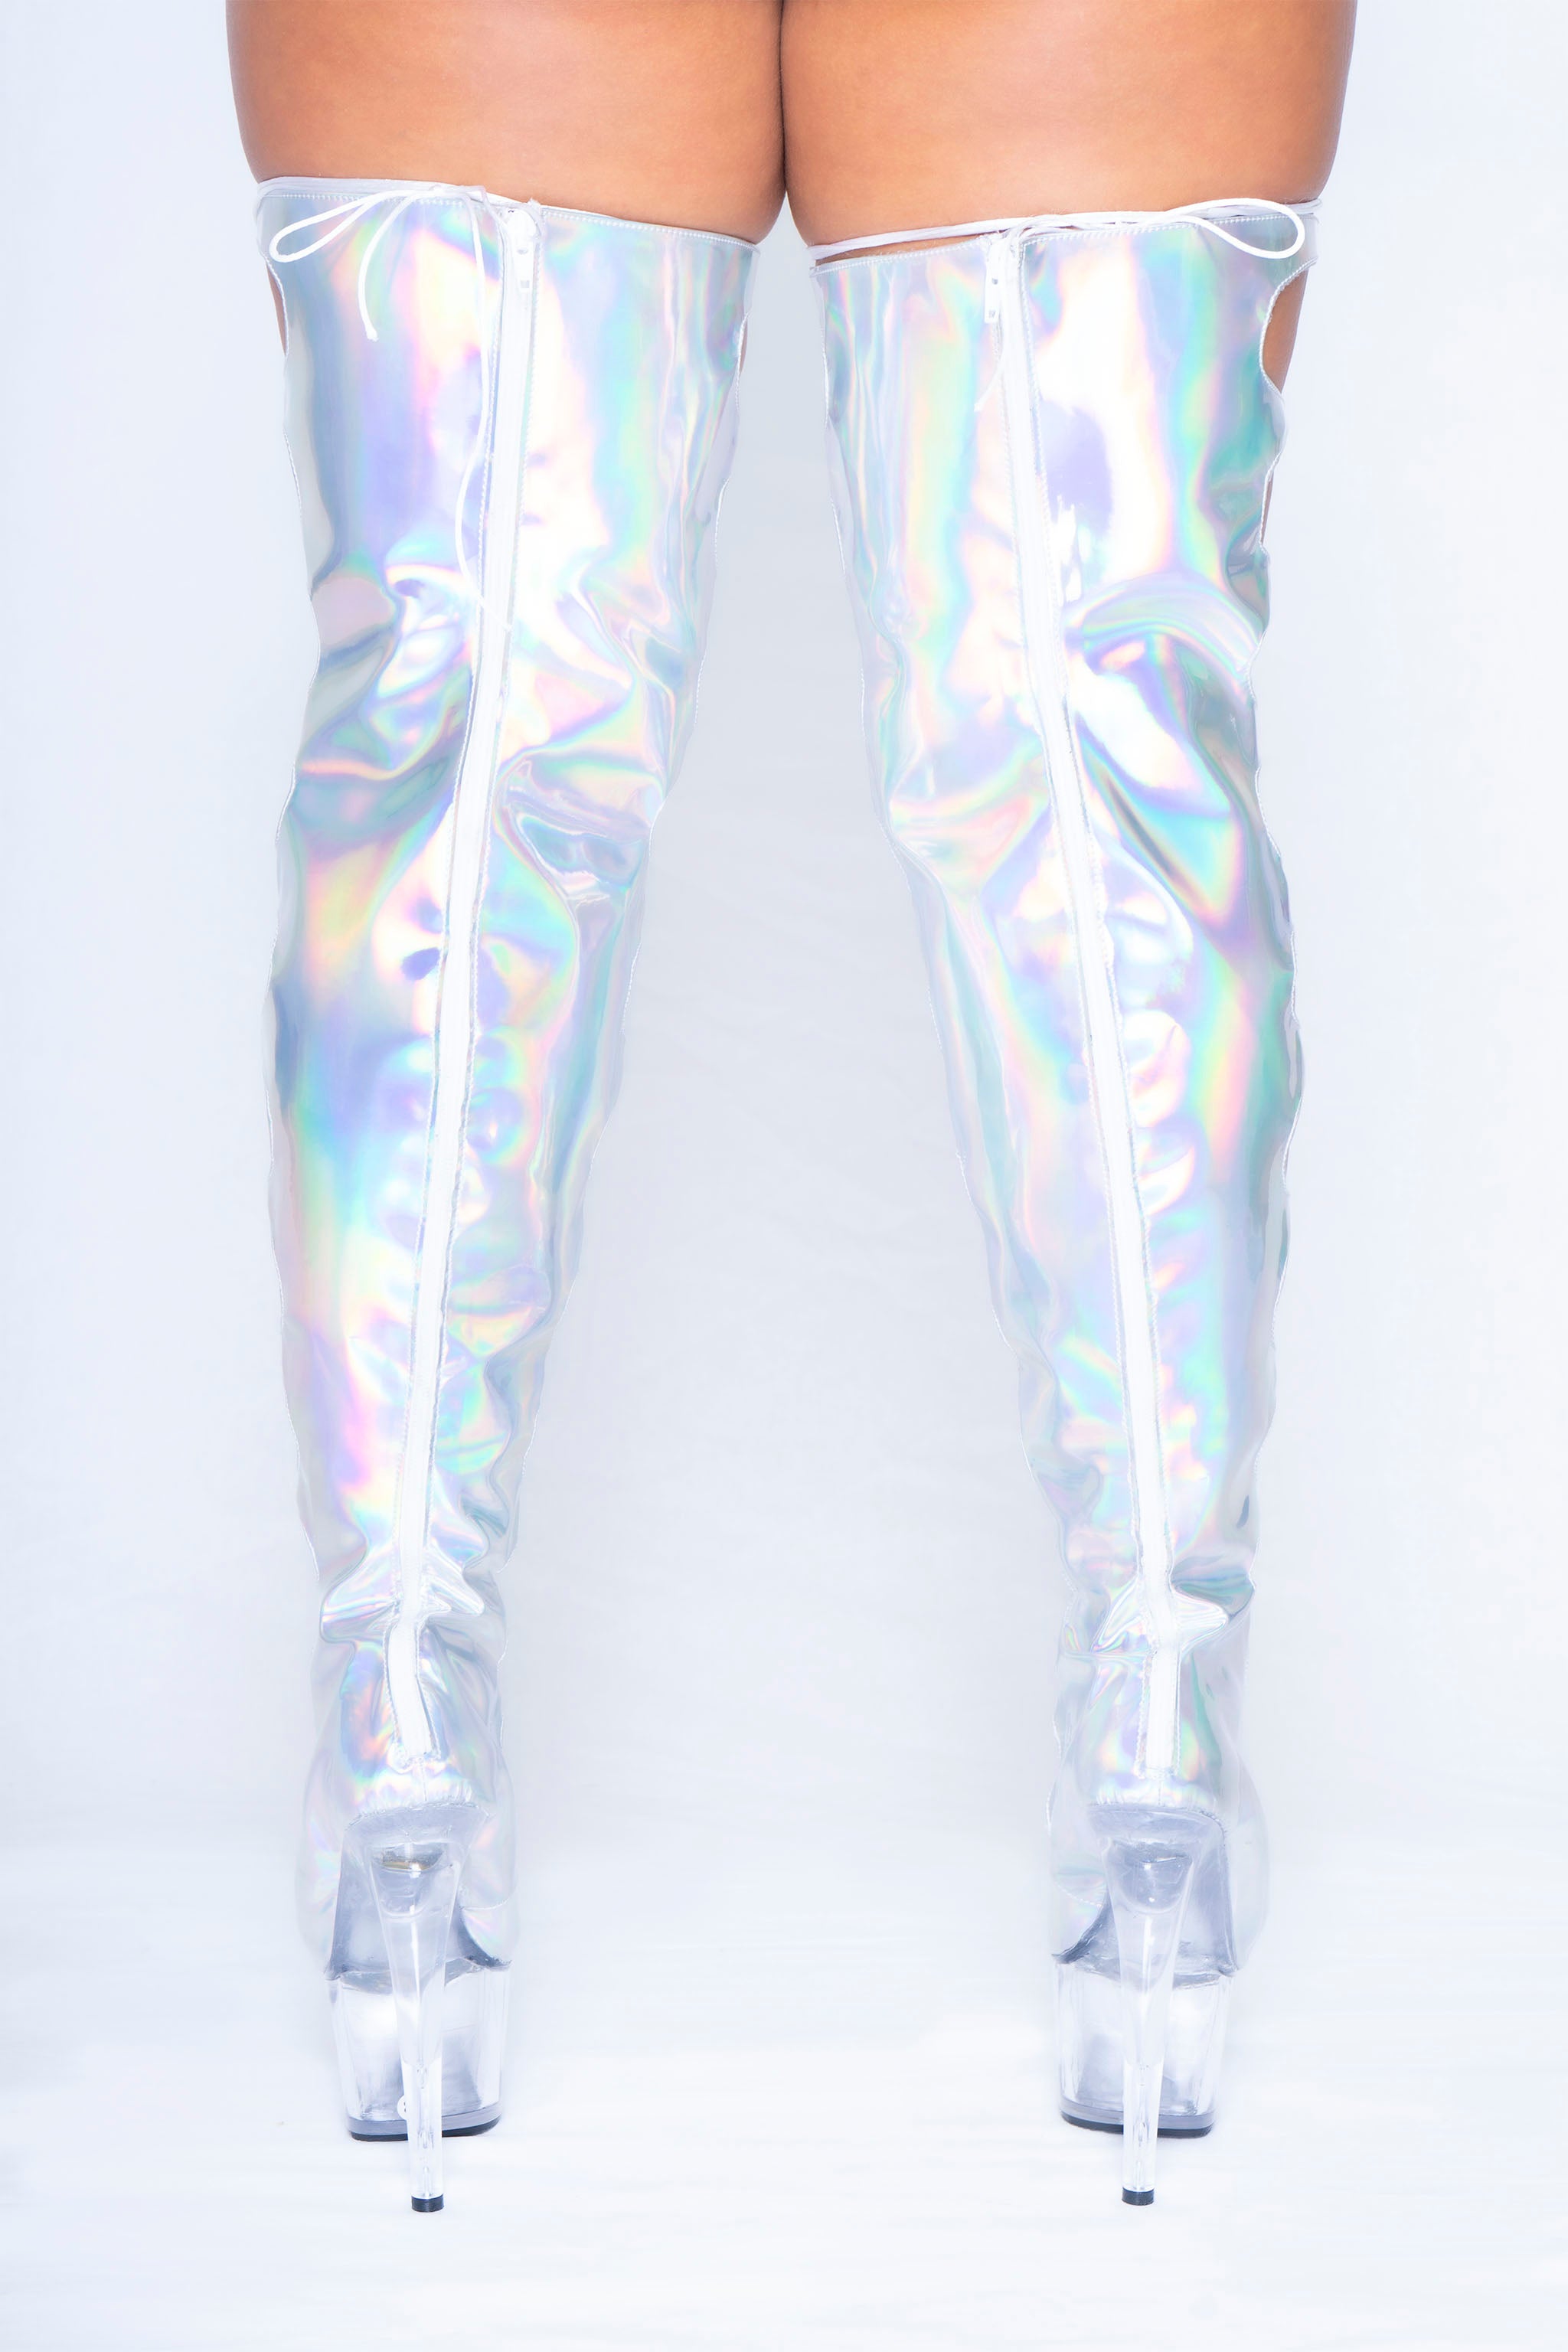 Hologram Hot Girl heels